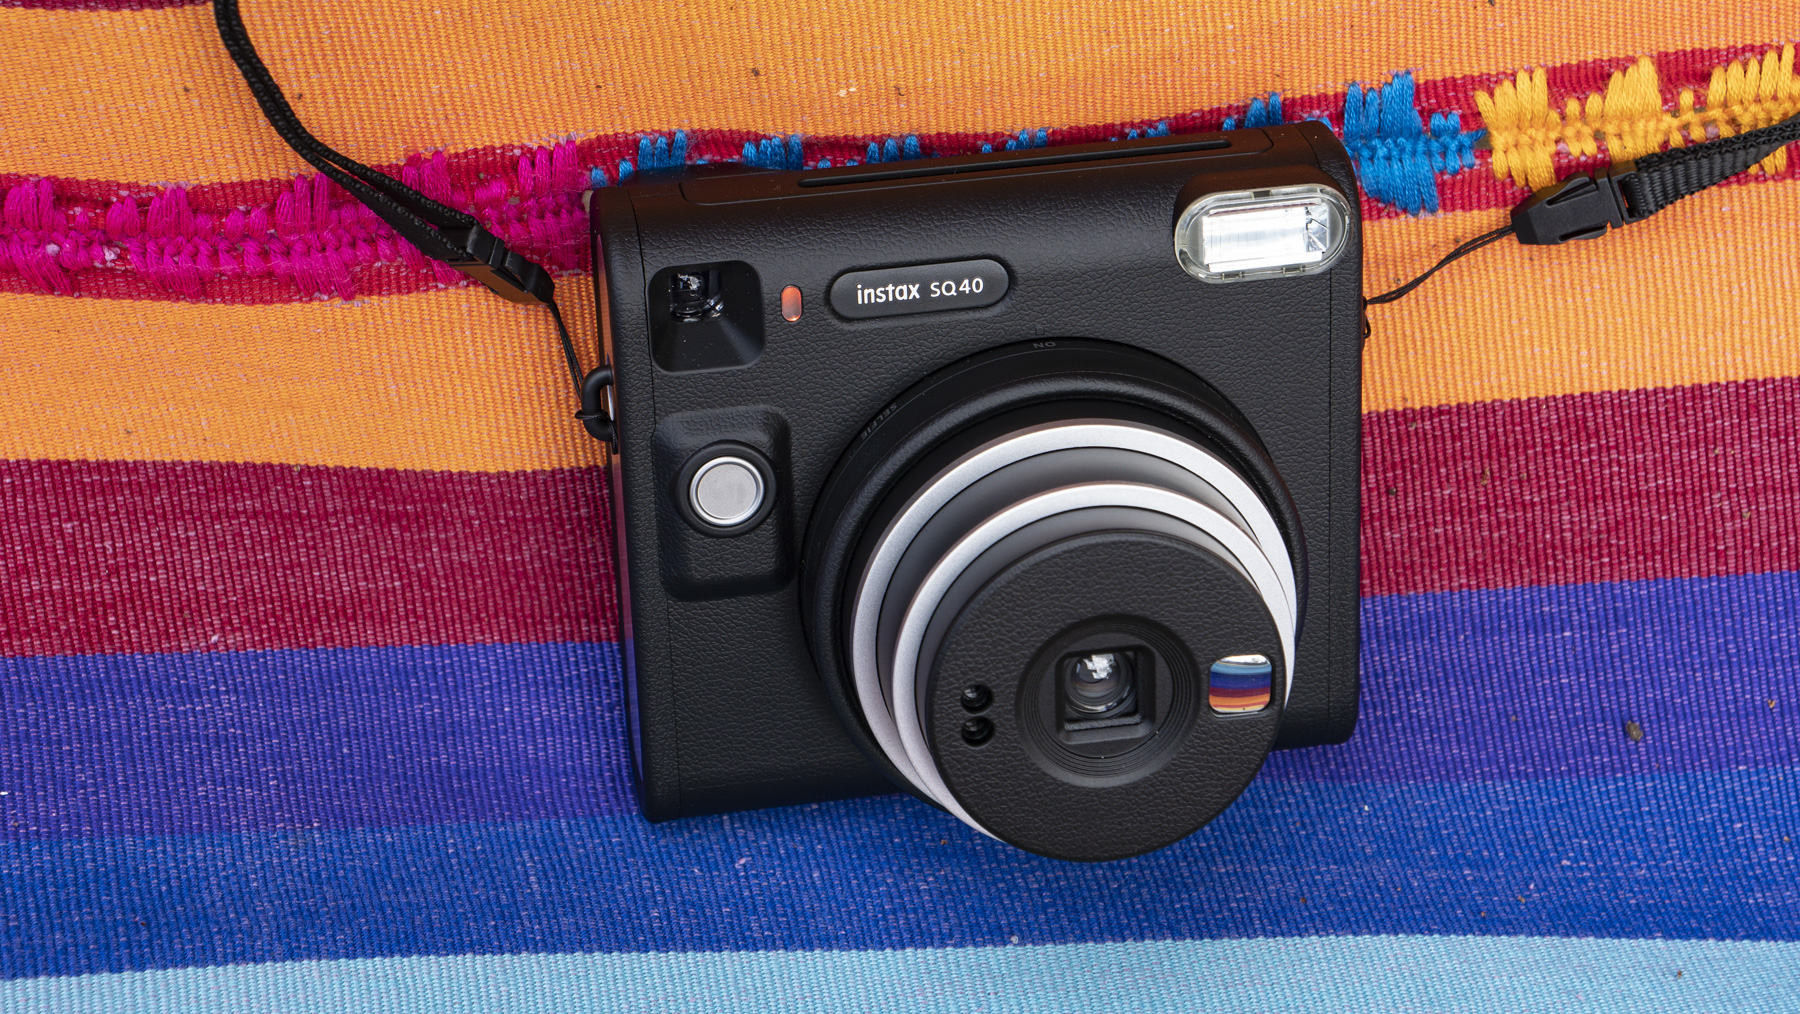 Fujifilm Instax SQ40 camera on a multi-color fabric background